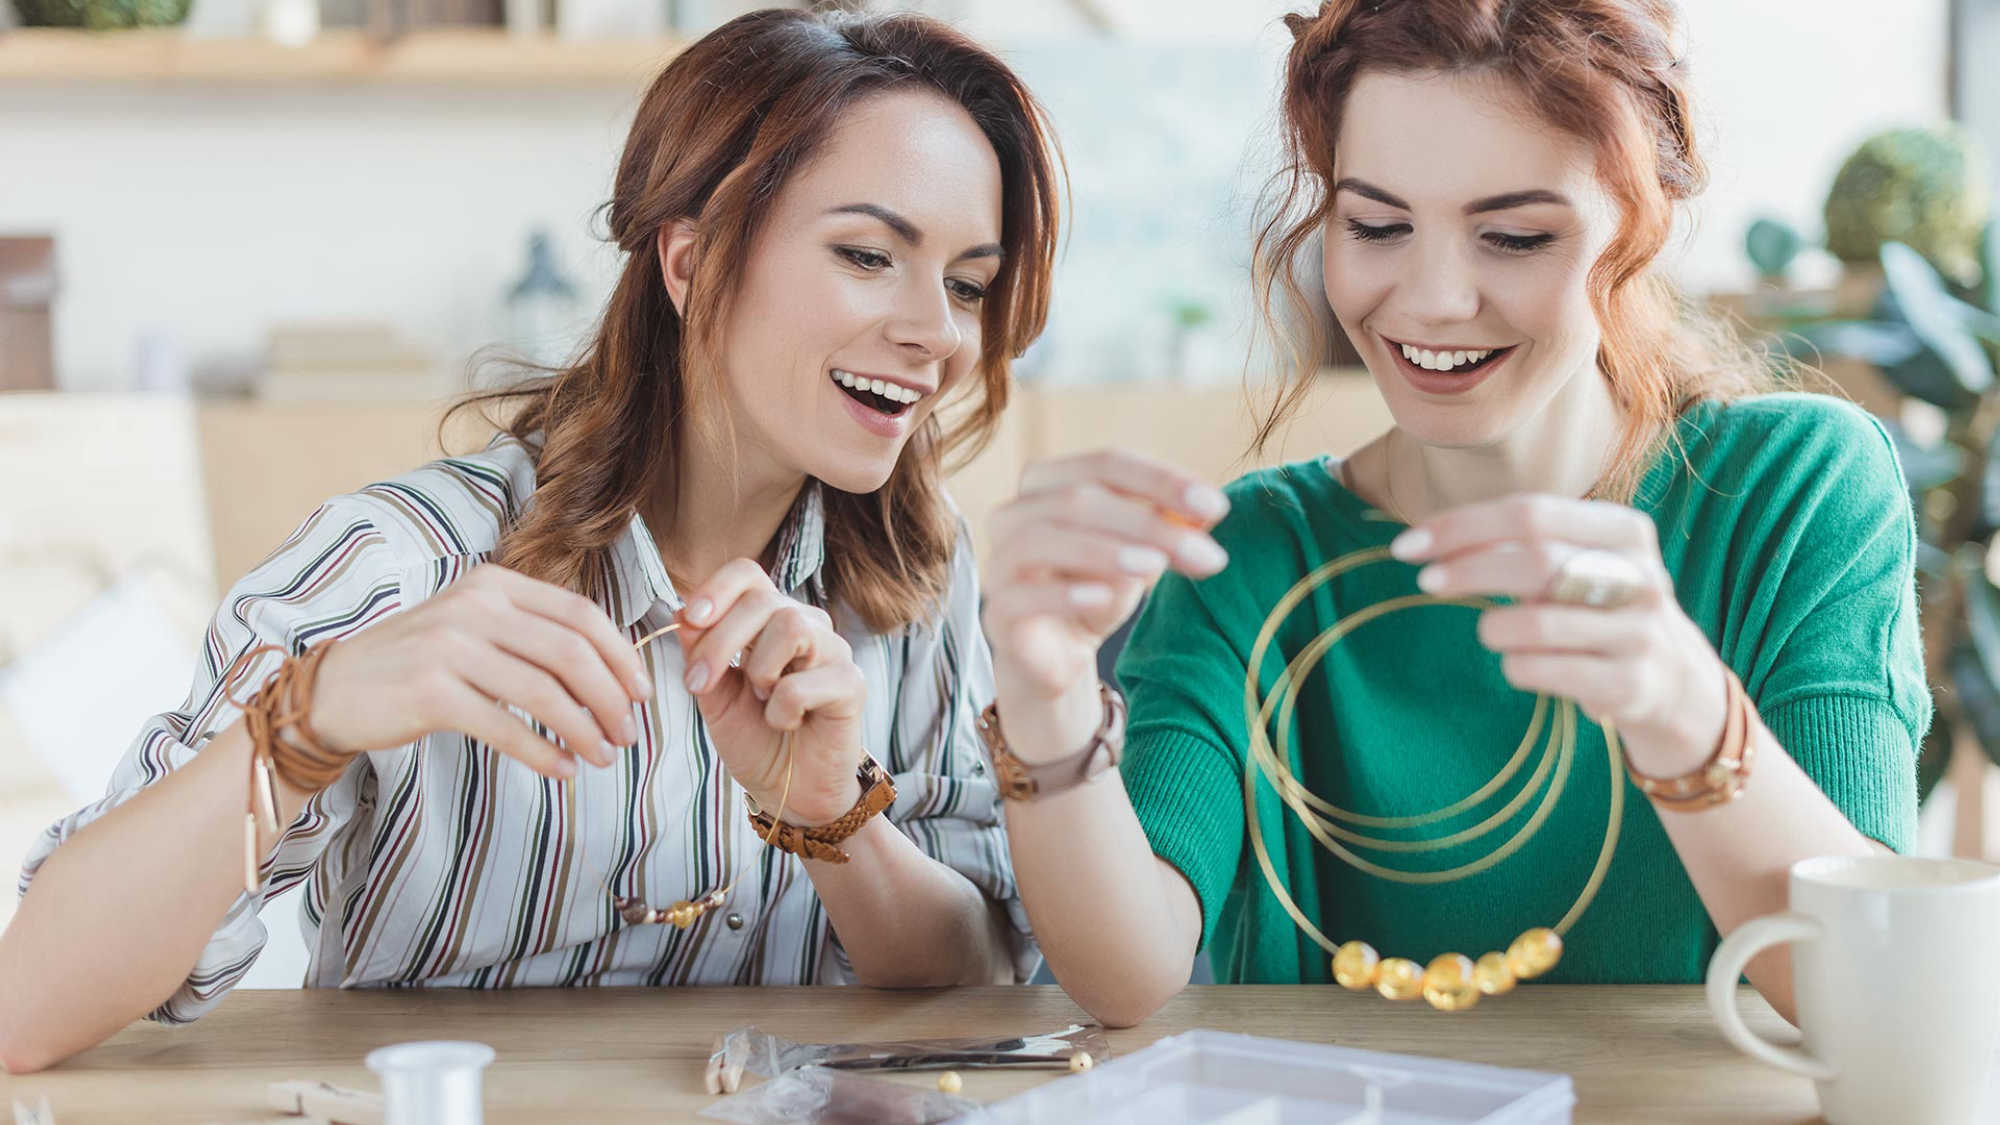 Two women making jewelry